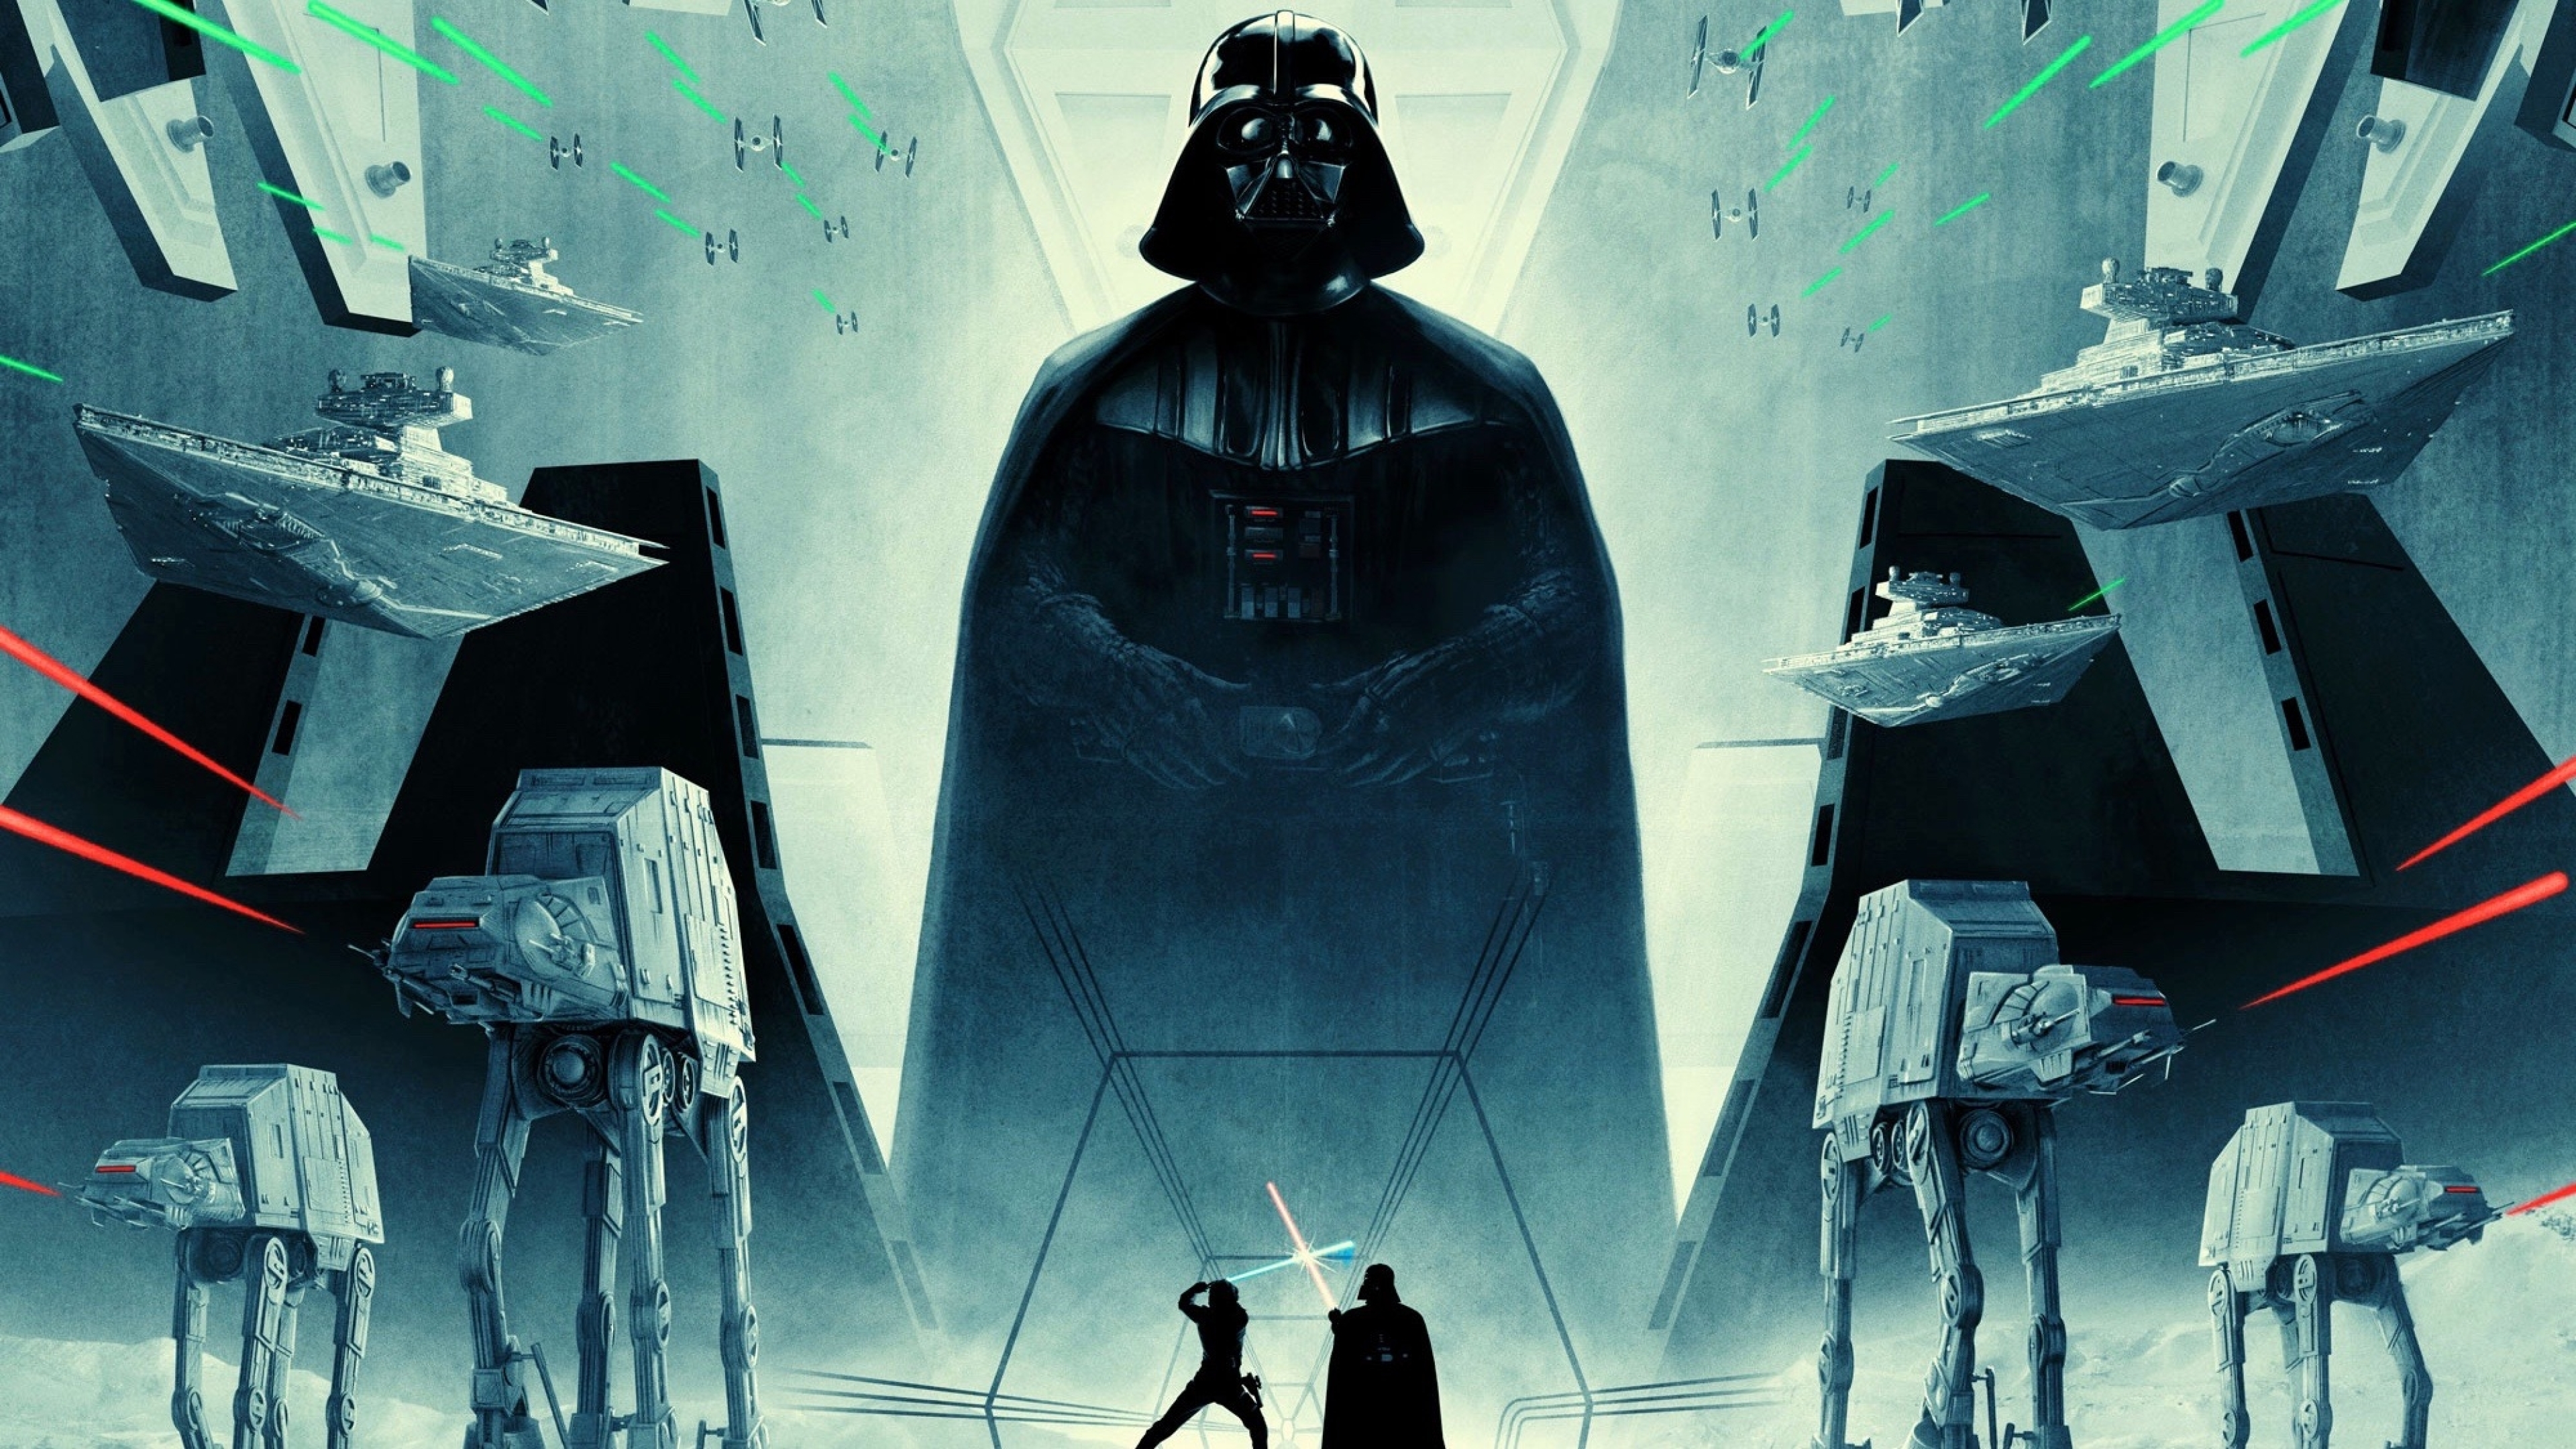 3840x2160 Star Wars Episode 5 The Empire Strikes Back 4k Wallpaper Hd